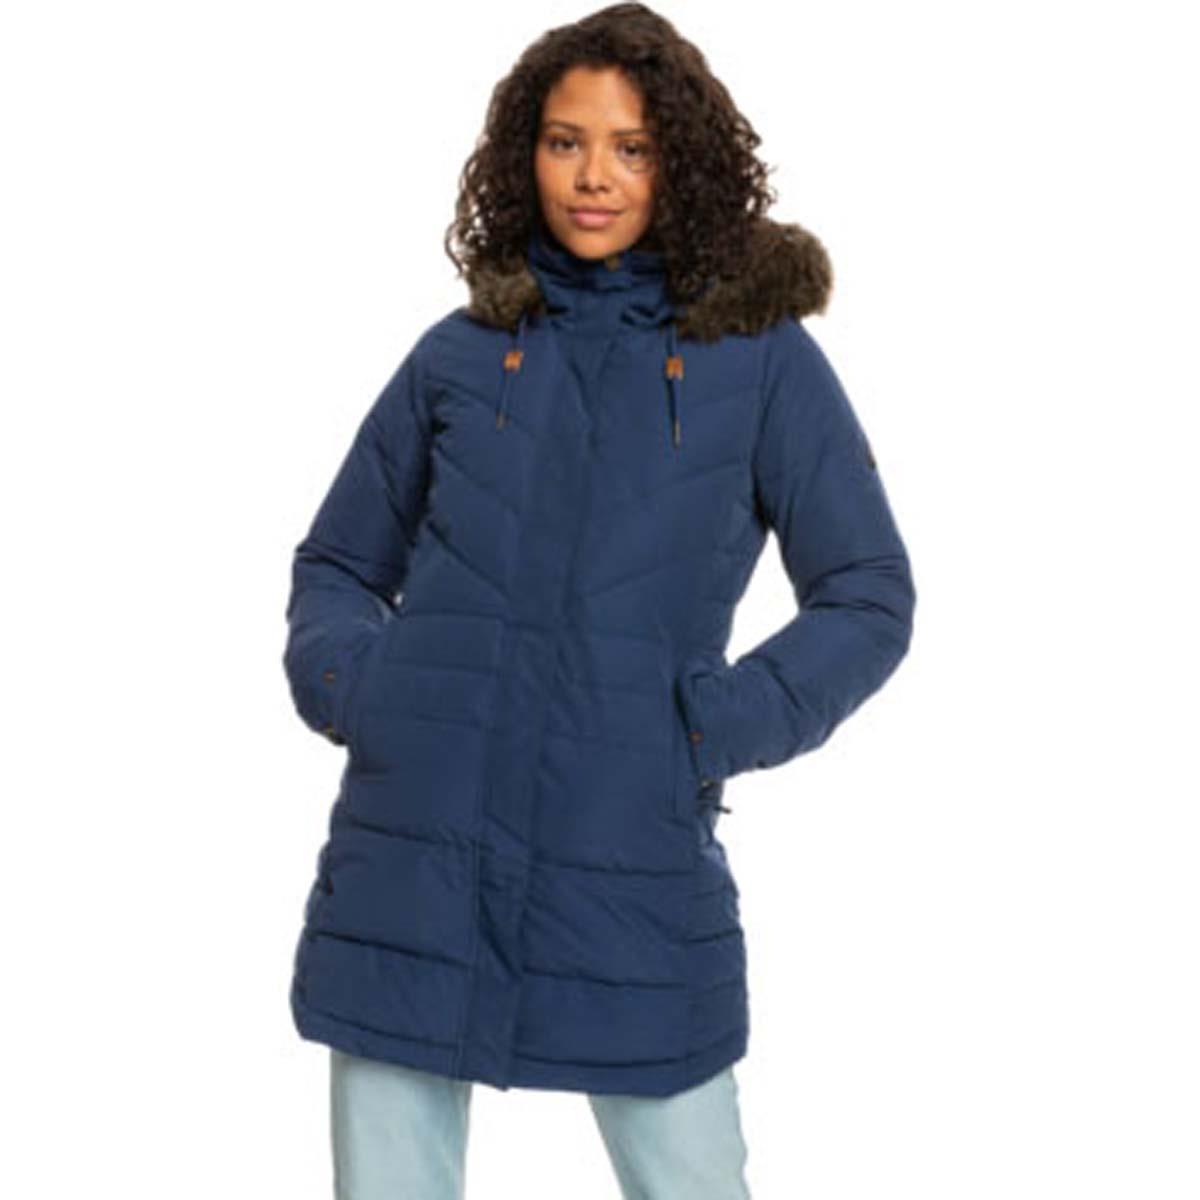 Roxy, Jackets & Coats, Roxy Dryflight Waterproof Jacket